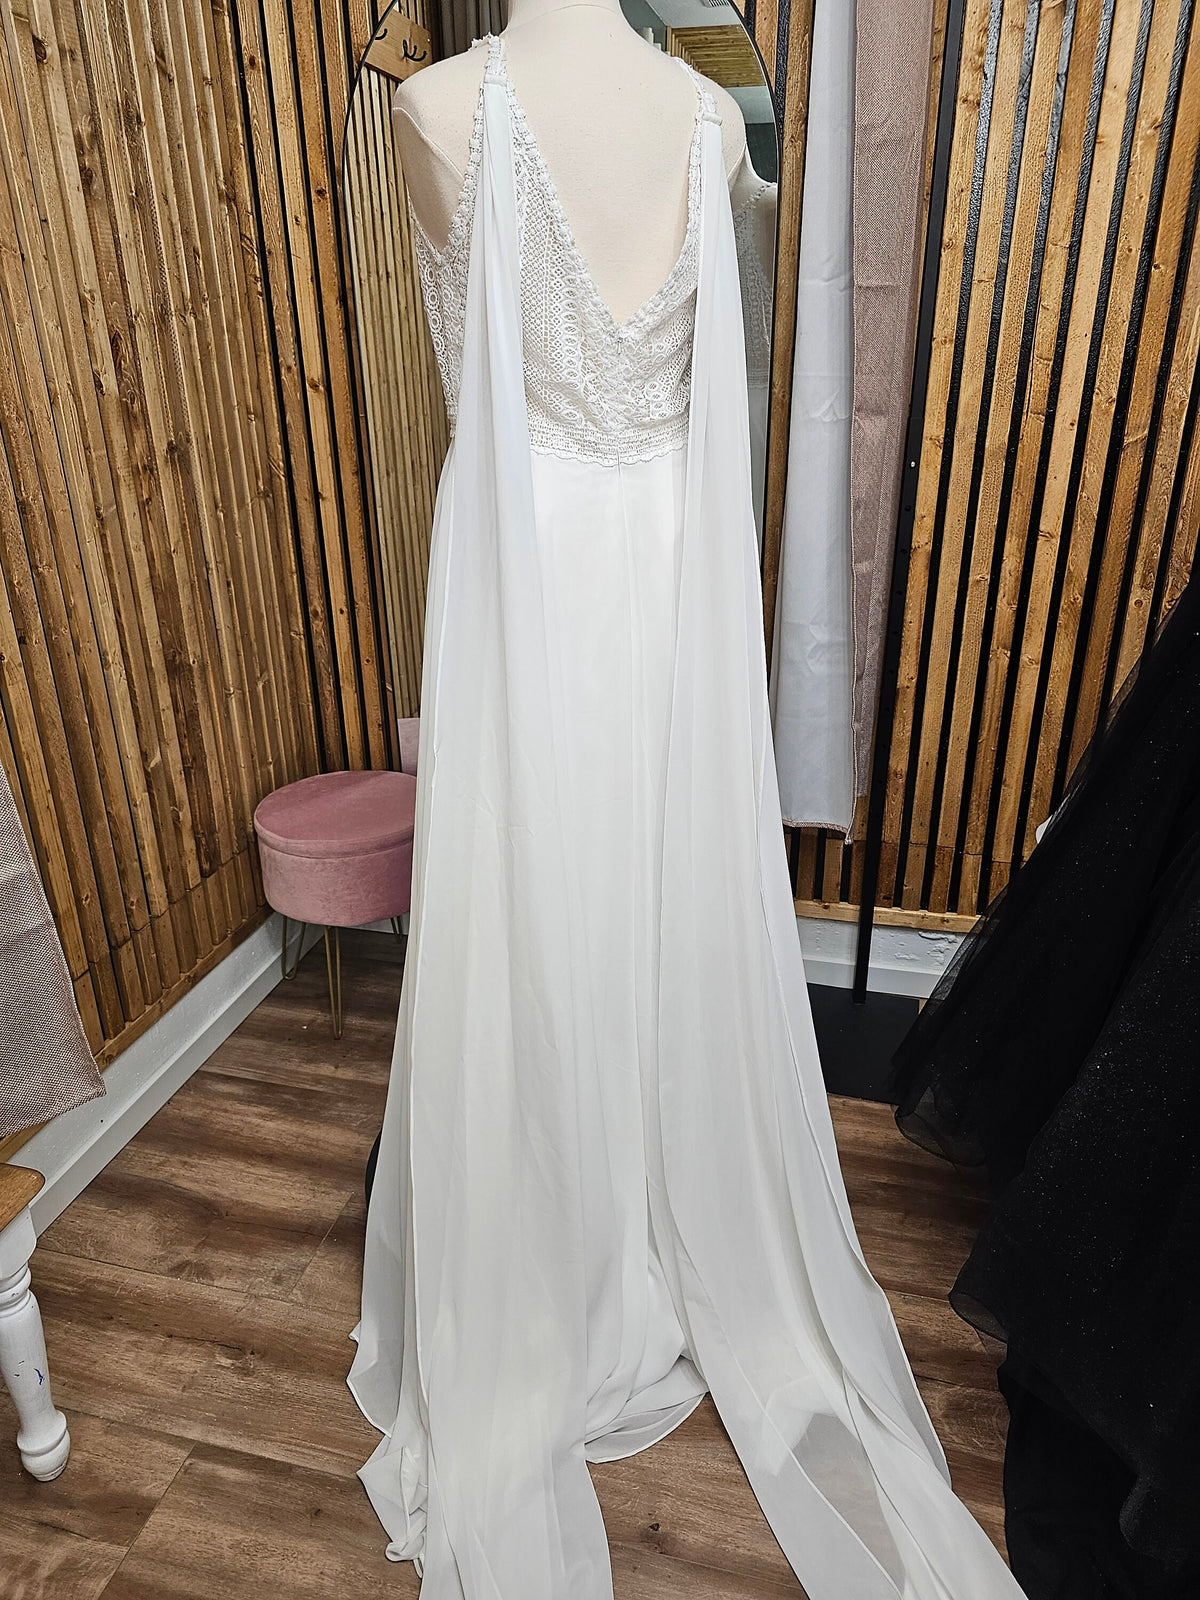 Boho Style ALine Wedding Dress Bridal Gown V Neckline Detachable Shoulder Cape Veil Chiffon Skirt Sleeveless Size 18 Ready to Ship